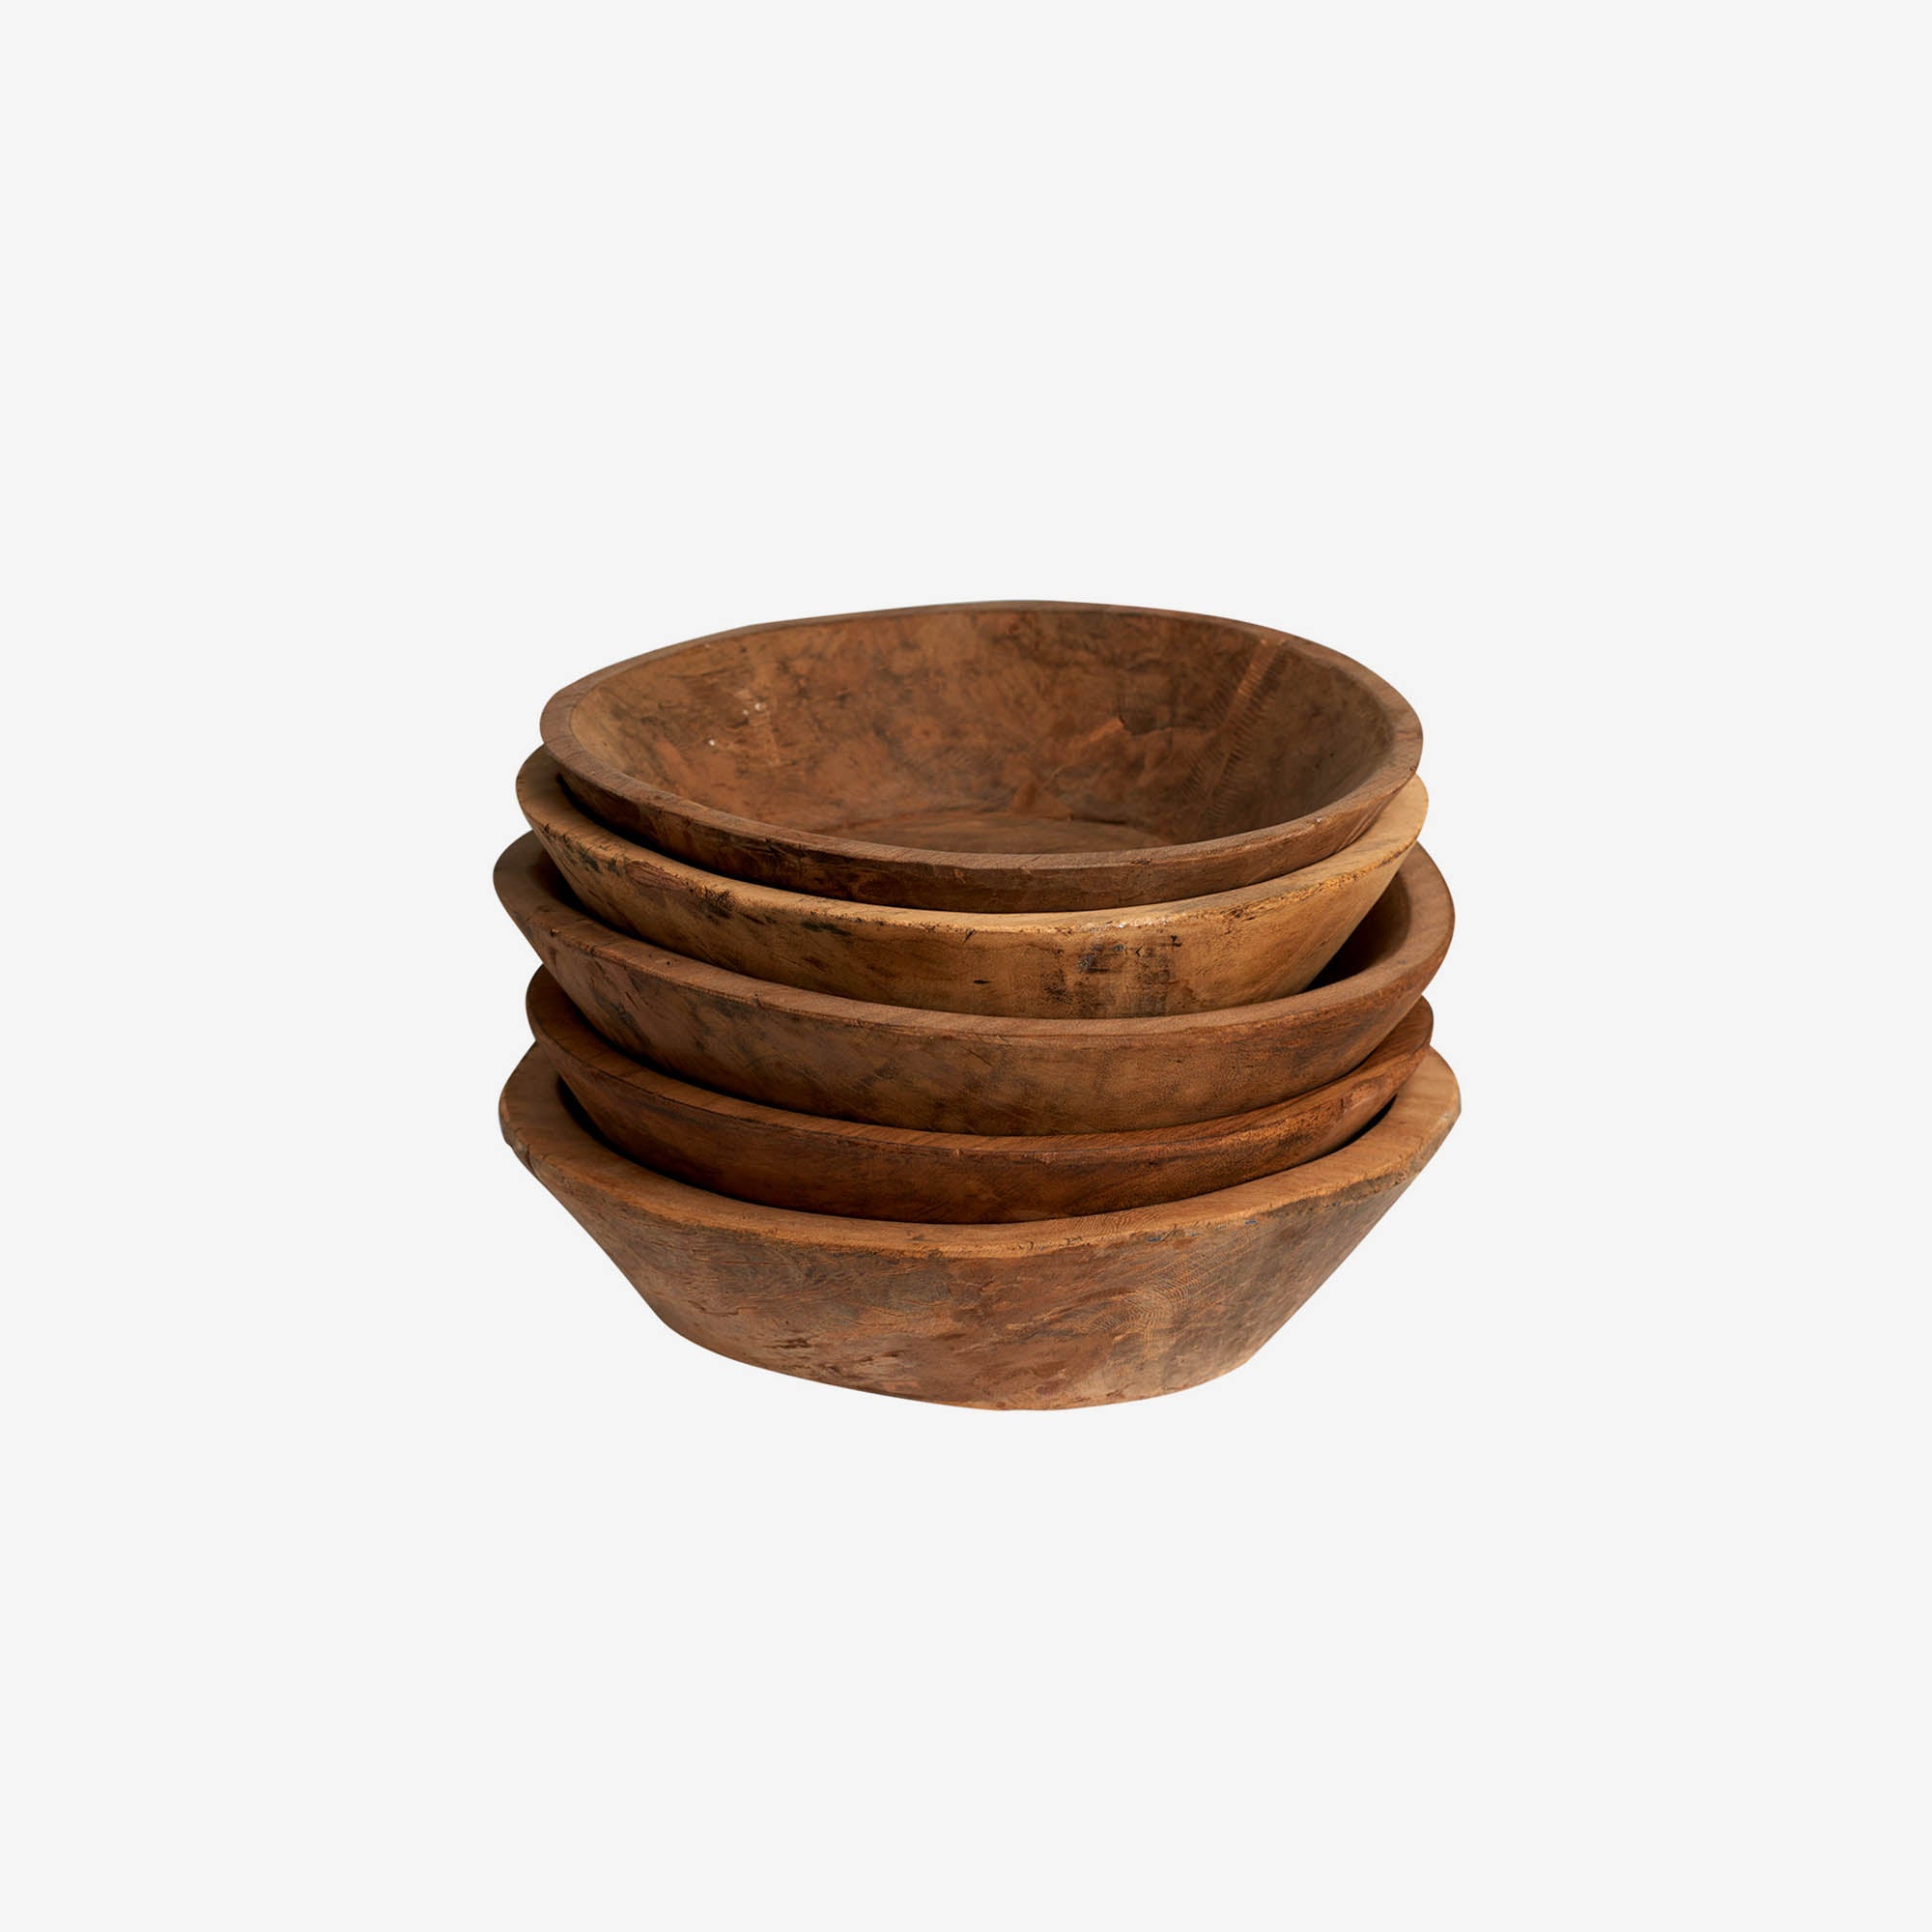 Solid wood bowl – wood